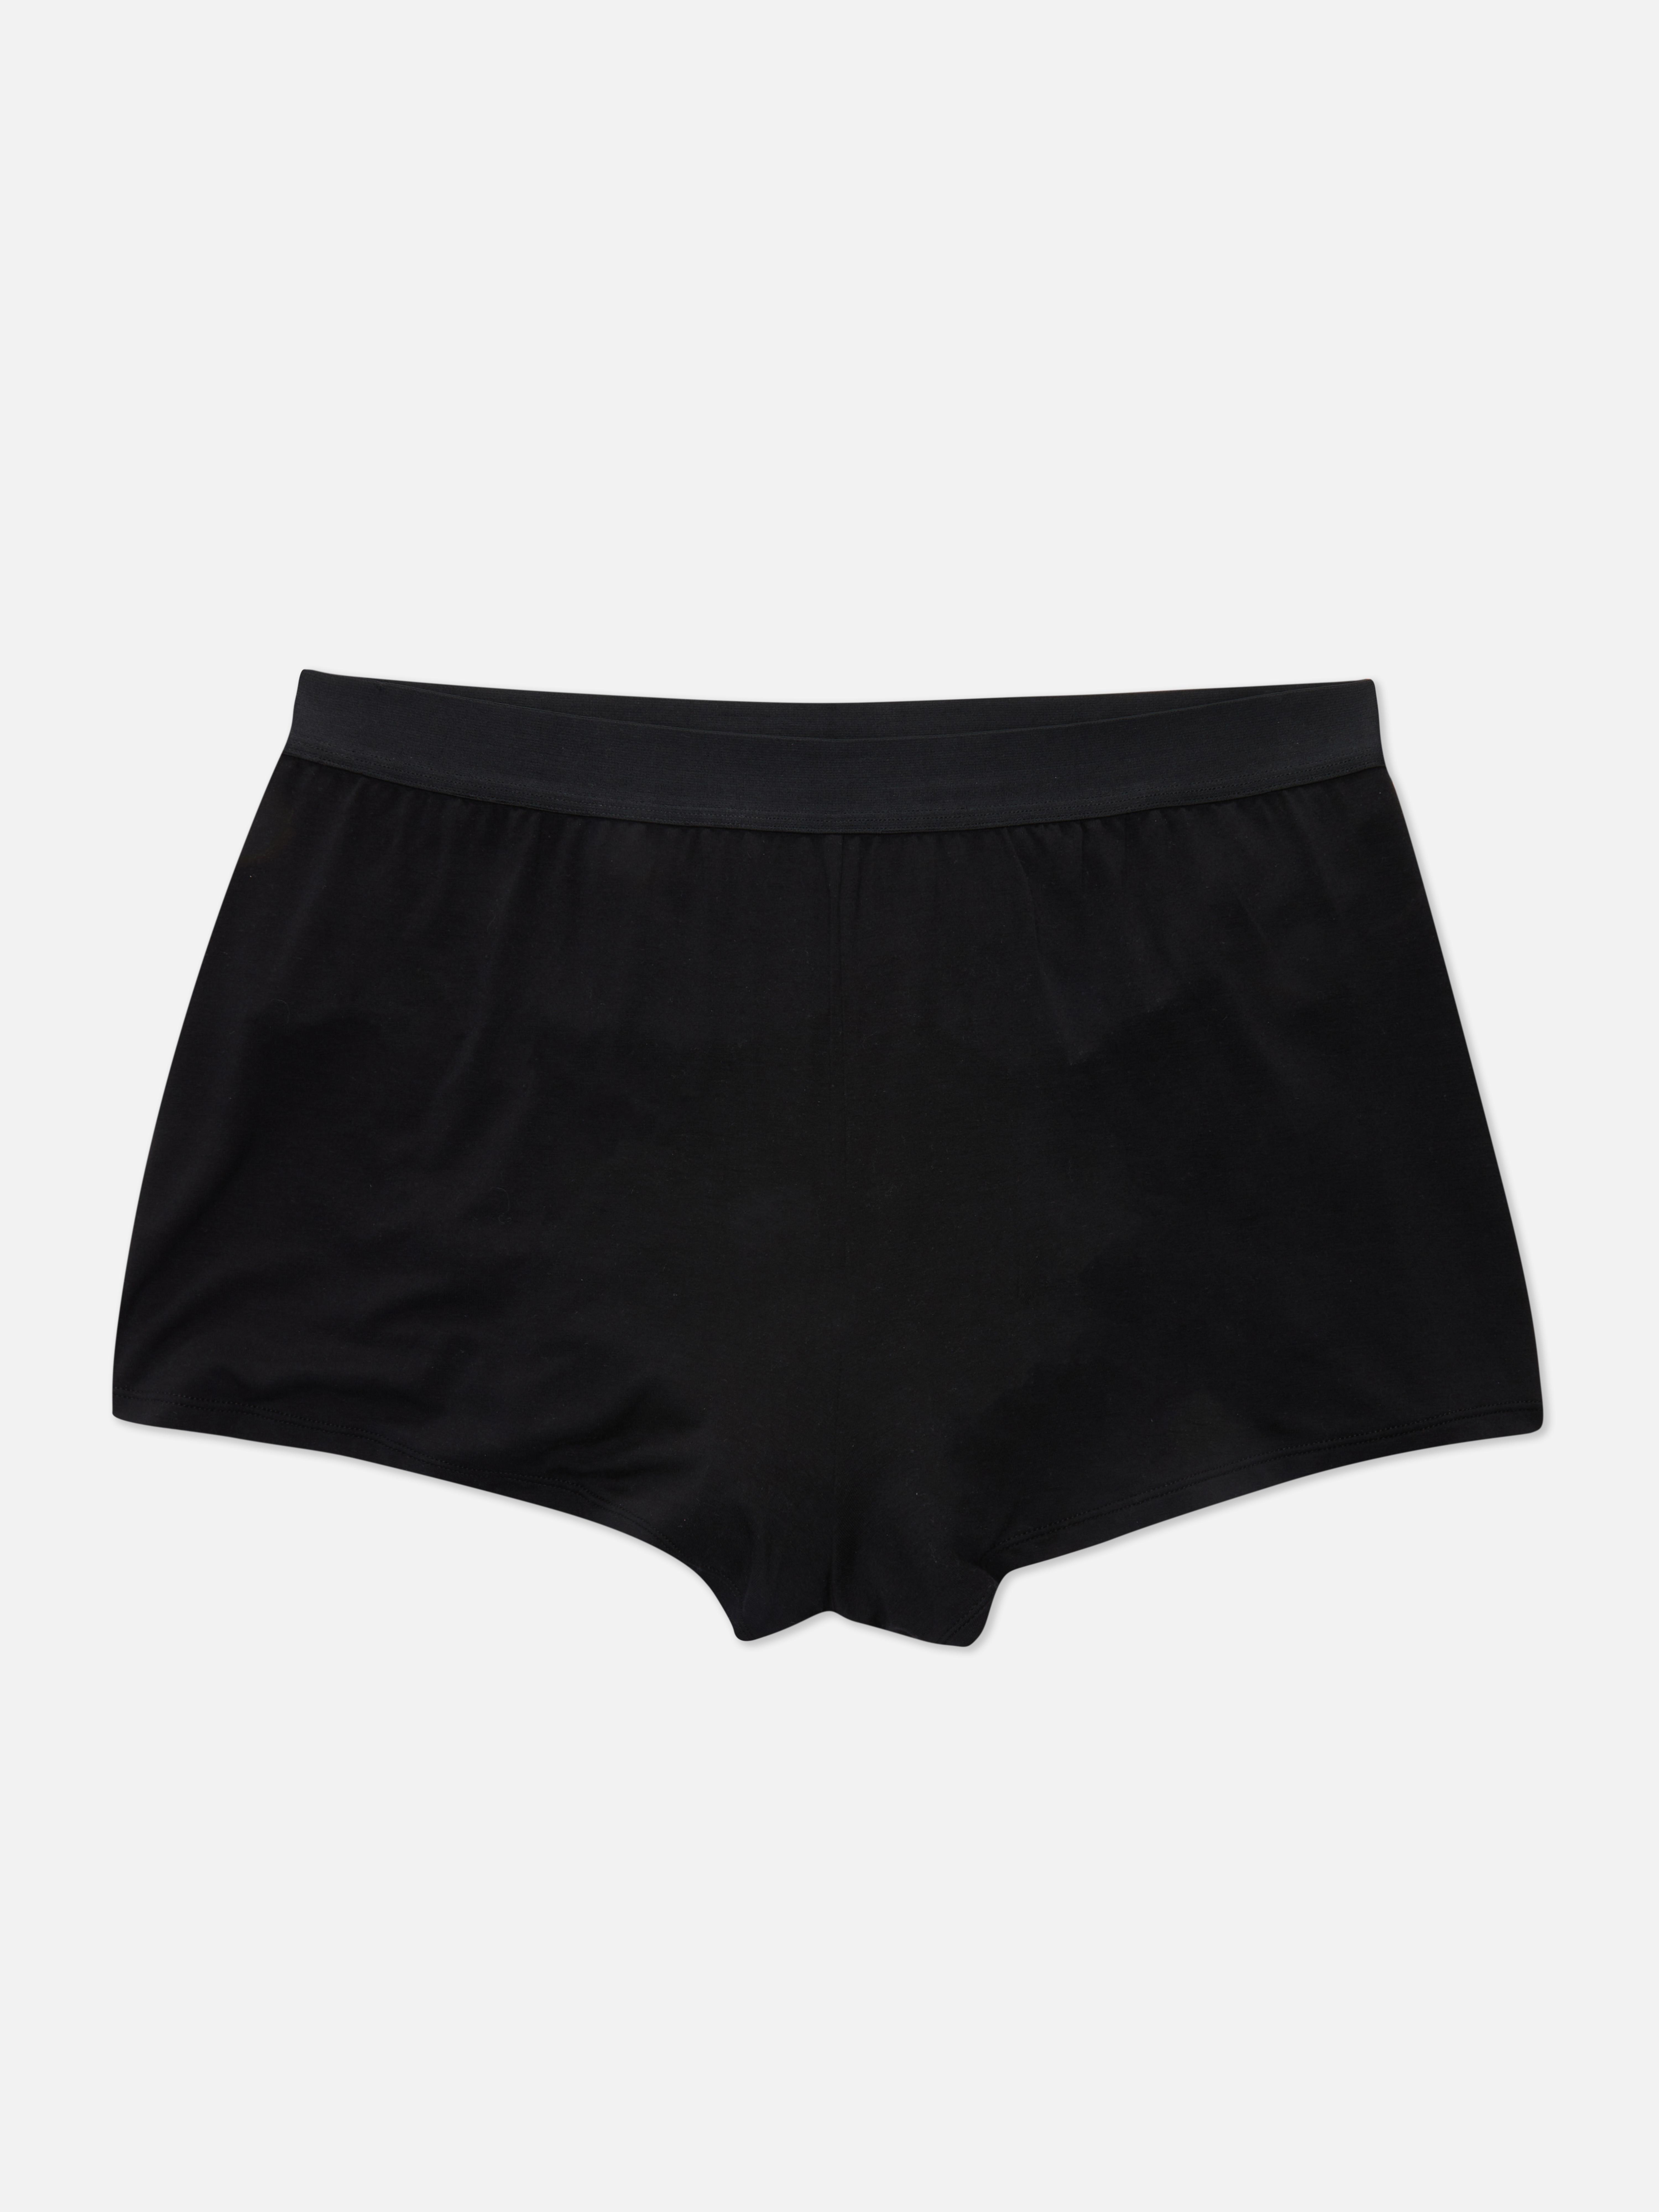 Womens Black High Waisted Overnight Period Underwear Shorts